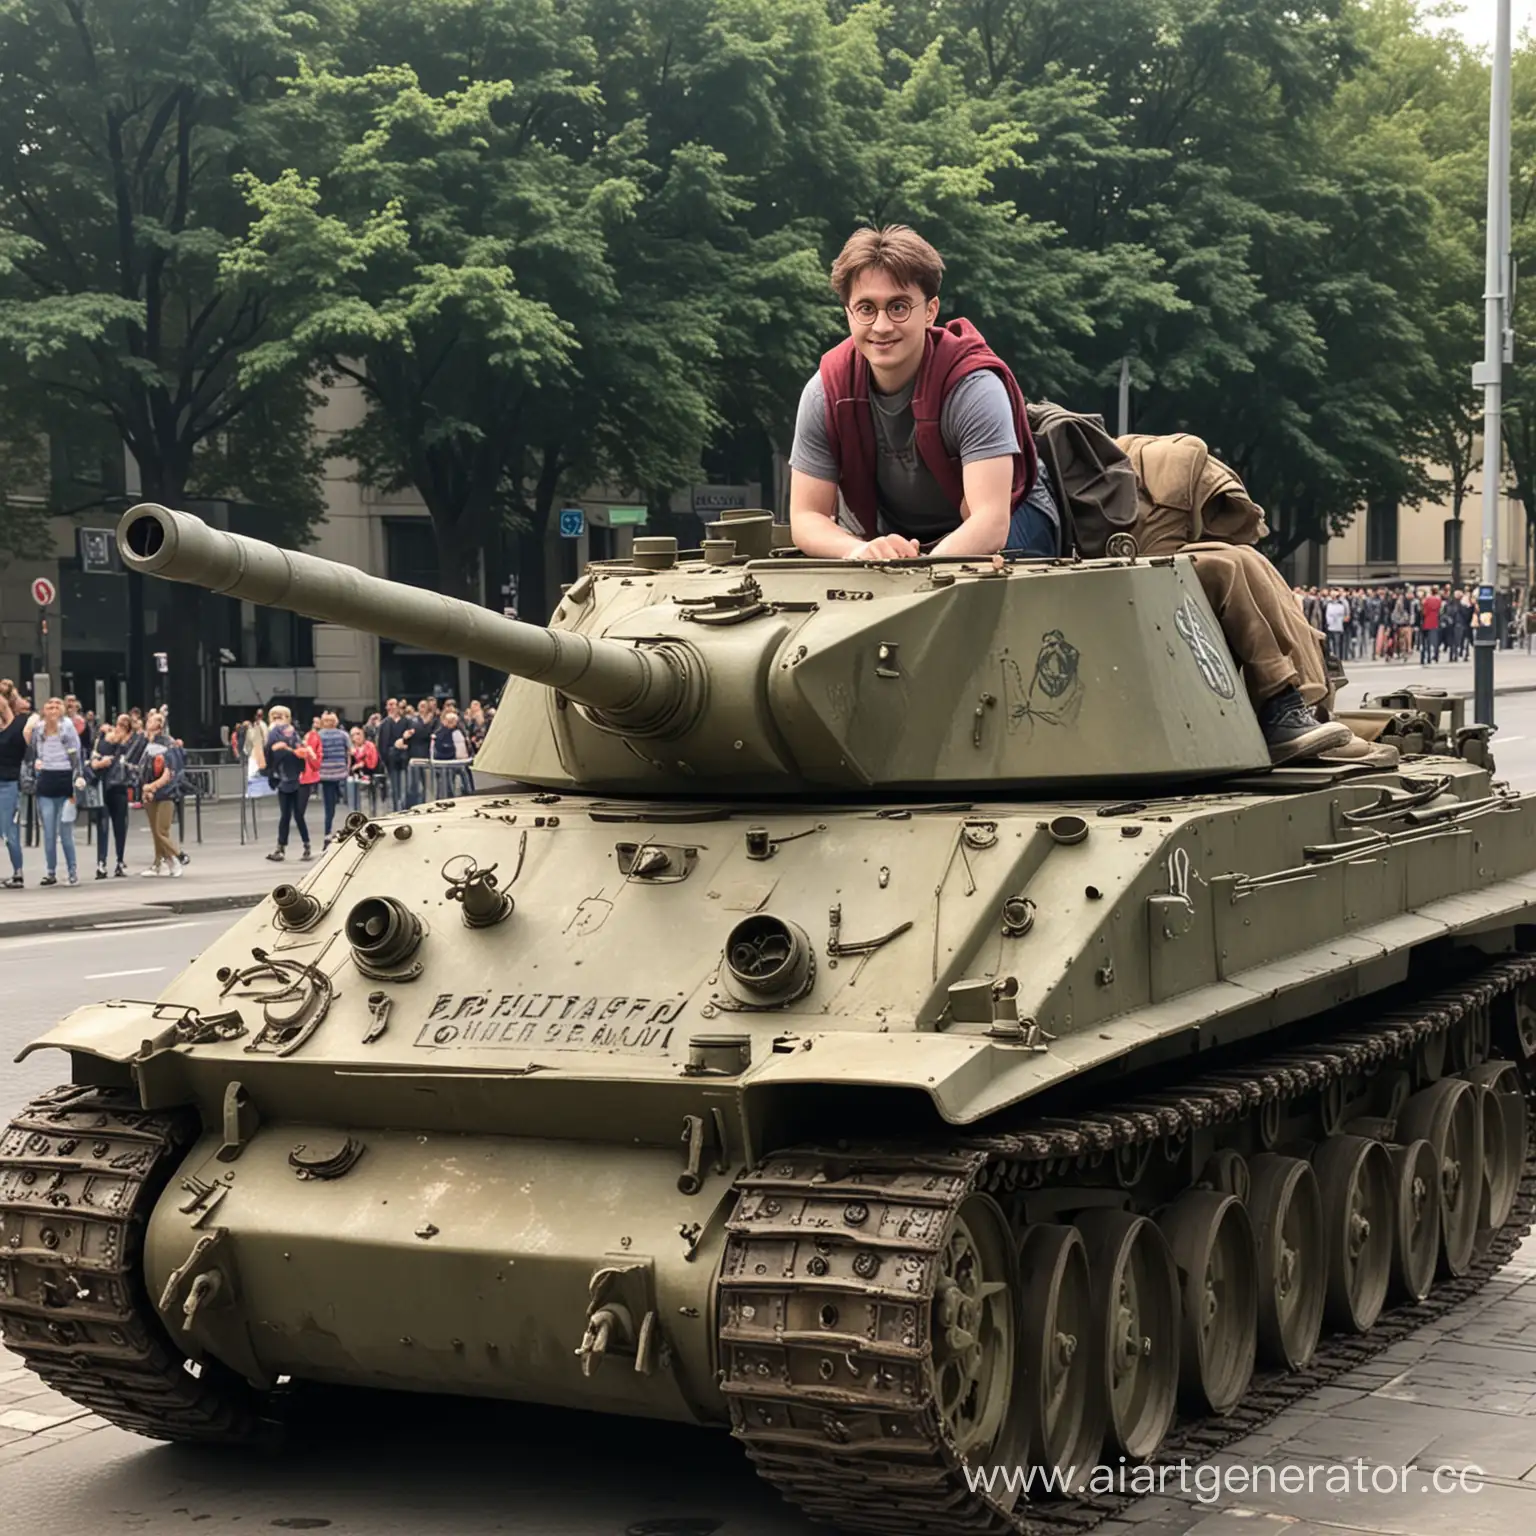 Harry-Potter-Riding-a-German-Tank-Through-Berlin-Streets